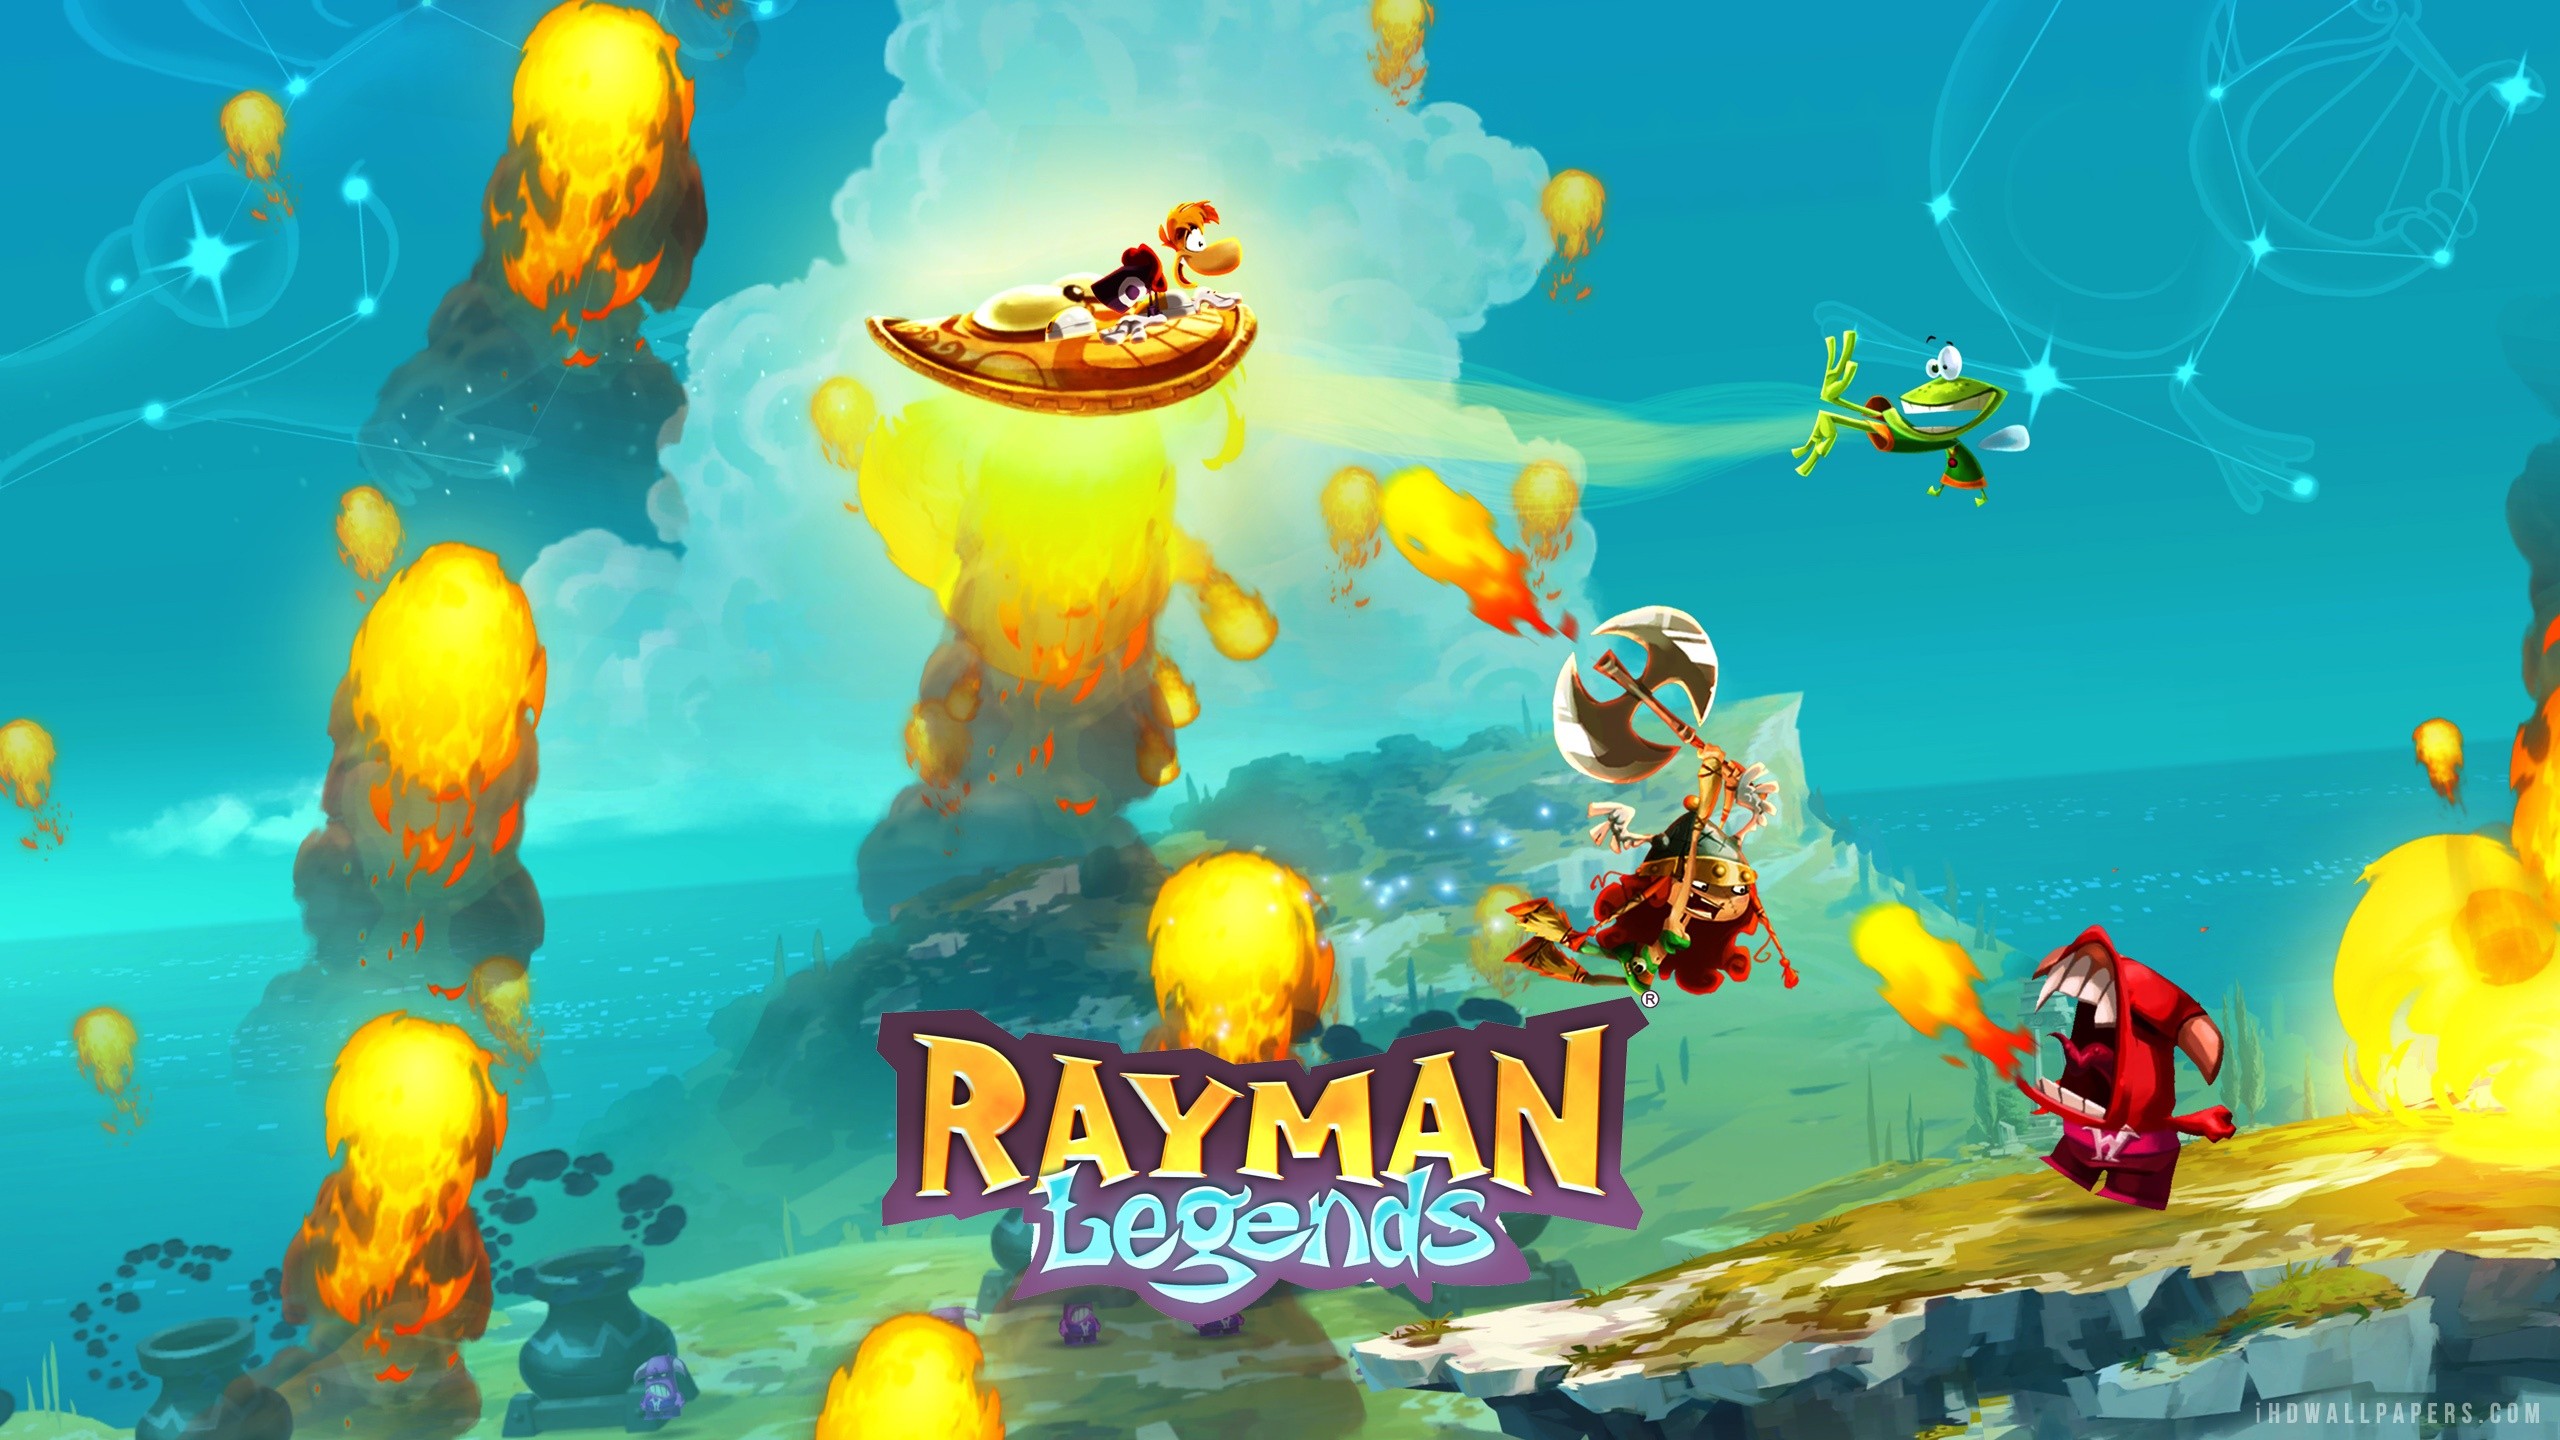 rayman legends wallpaper,action adventure game,games,adventure game,screenshot,pc game